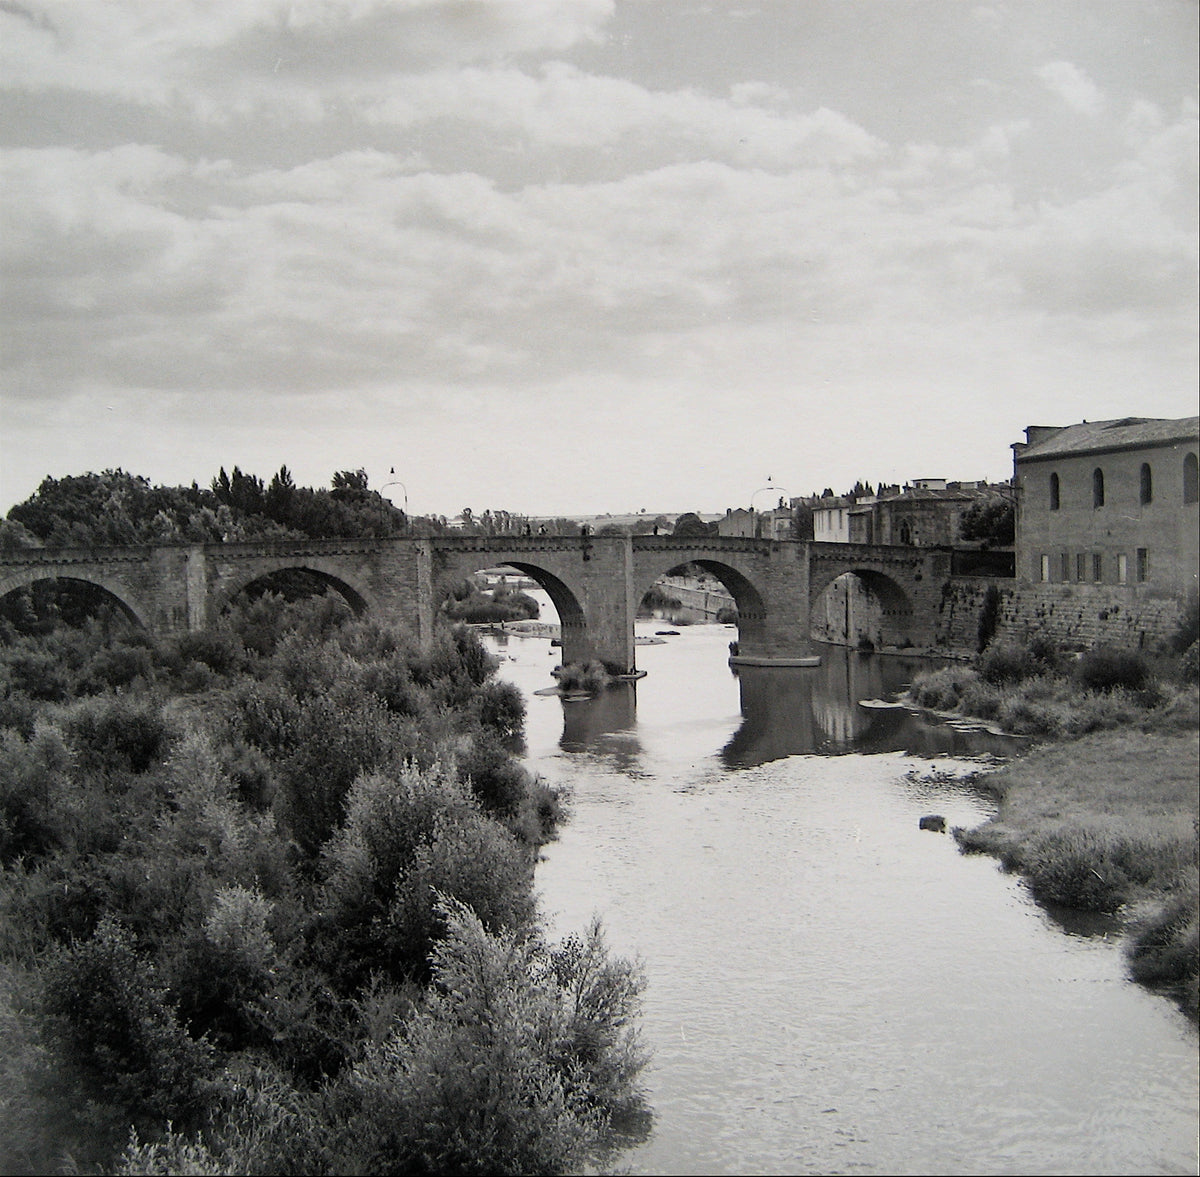 Bridge over Water &lt;br&gt;1960s Photograph&lt;br&gt;&lt;br&gt;#16266